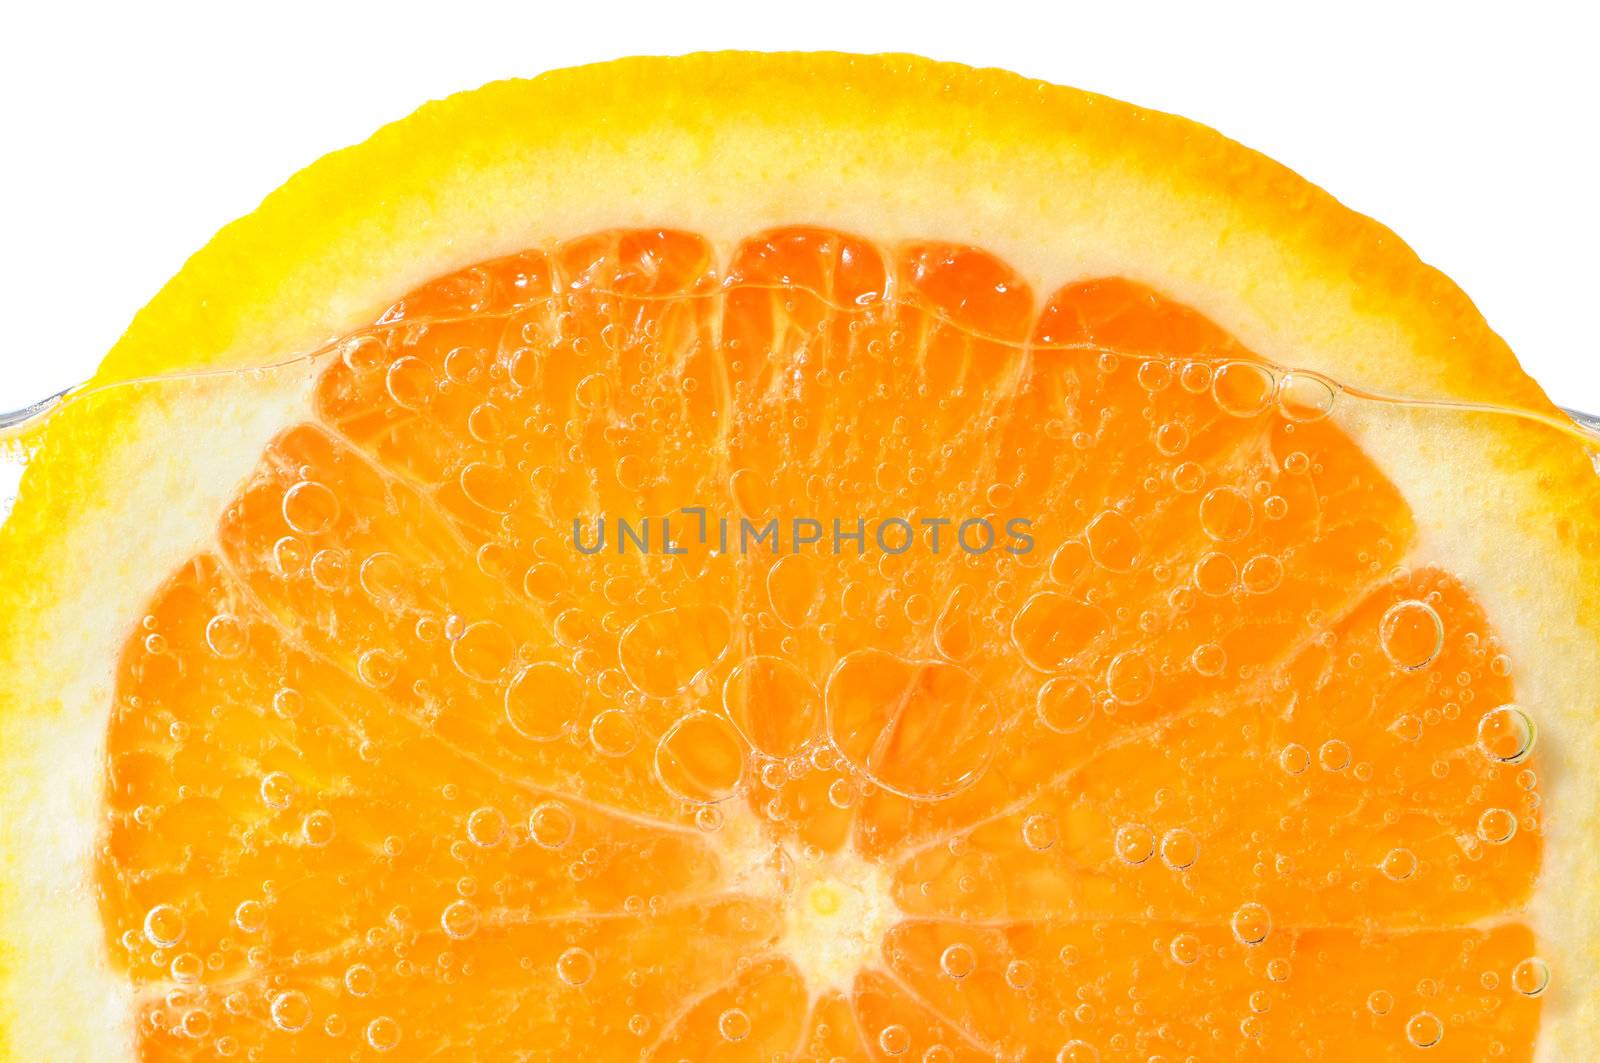 Orange slice in water by elenathewise